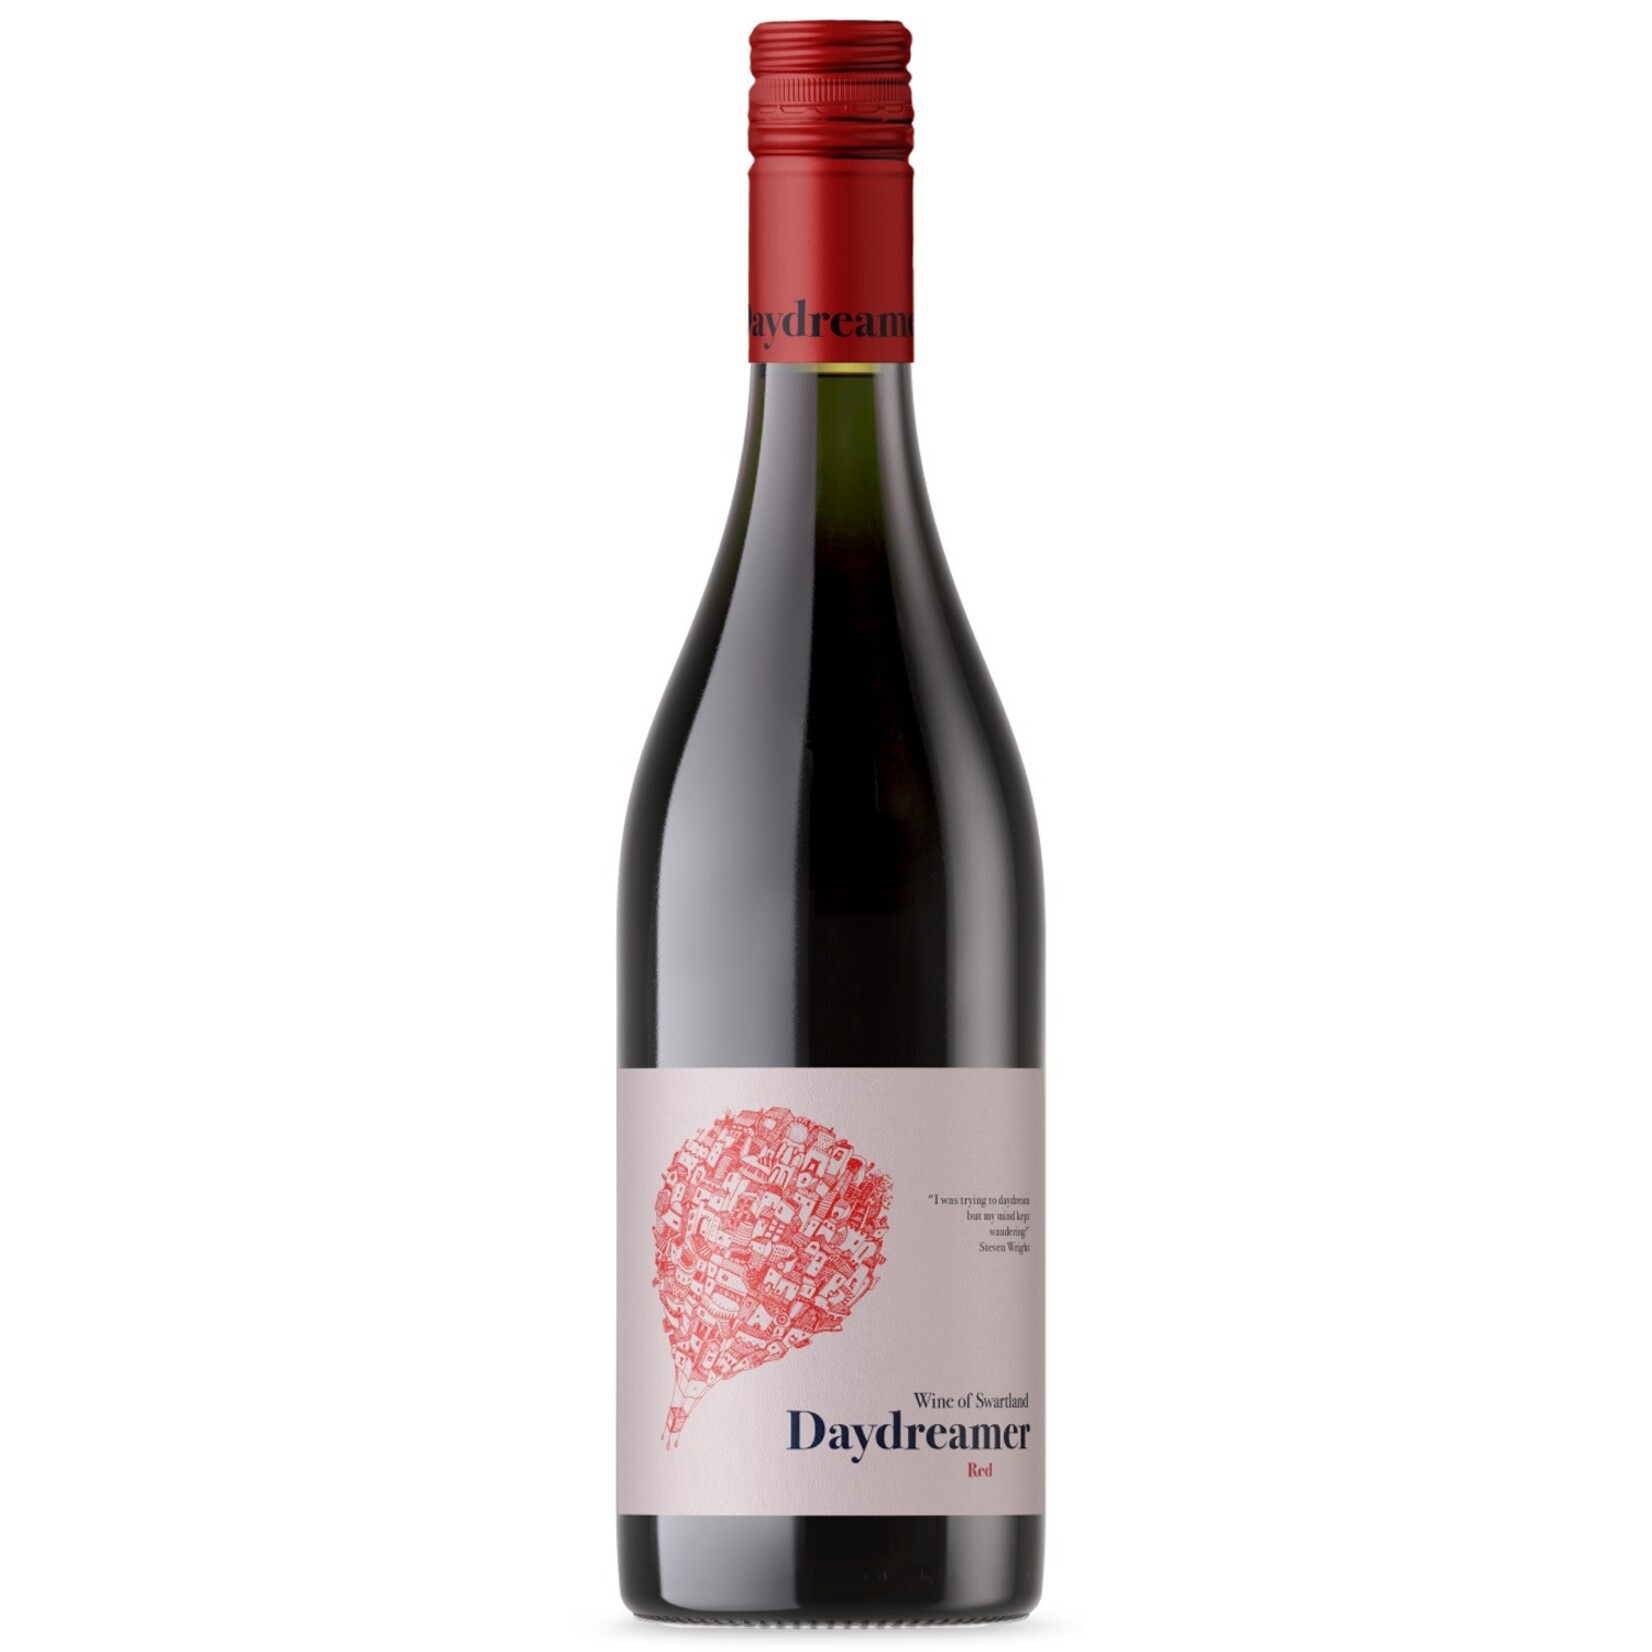 Daydreamer Red 2022 Wine of Swartland